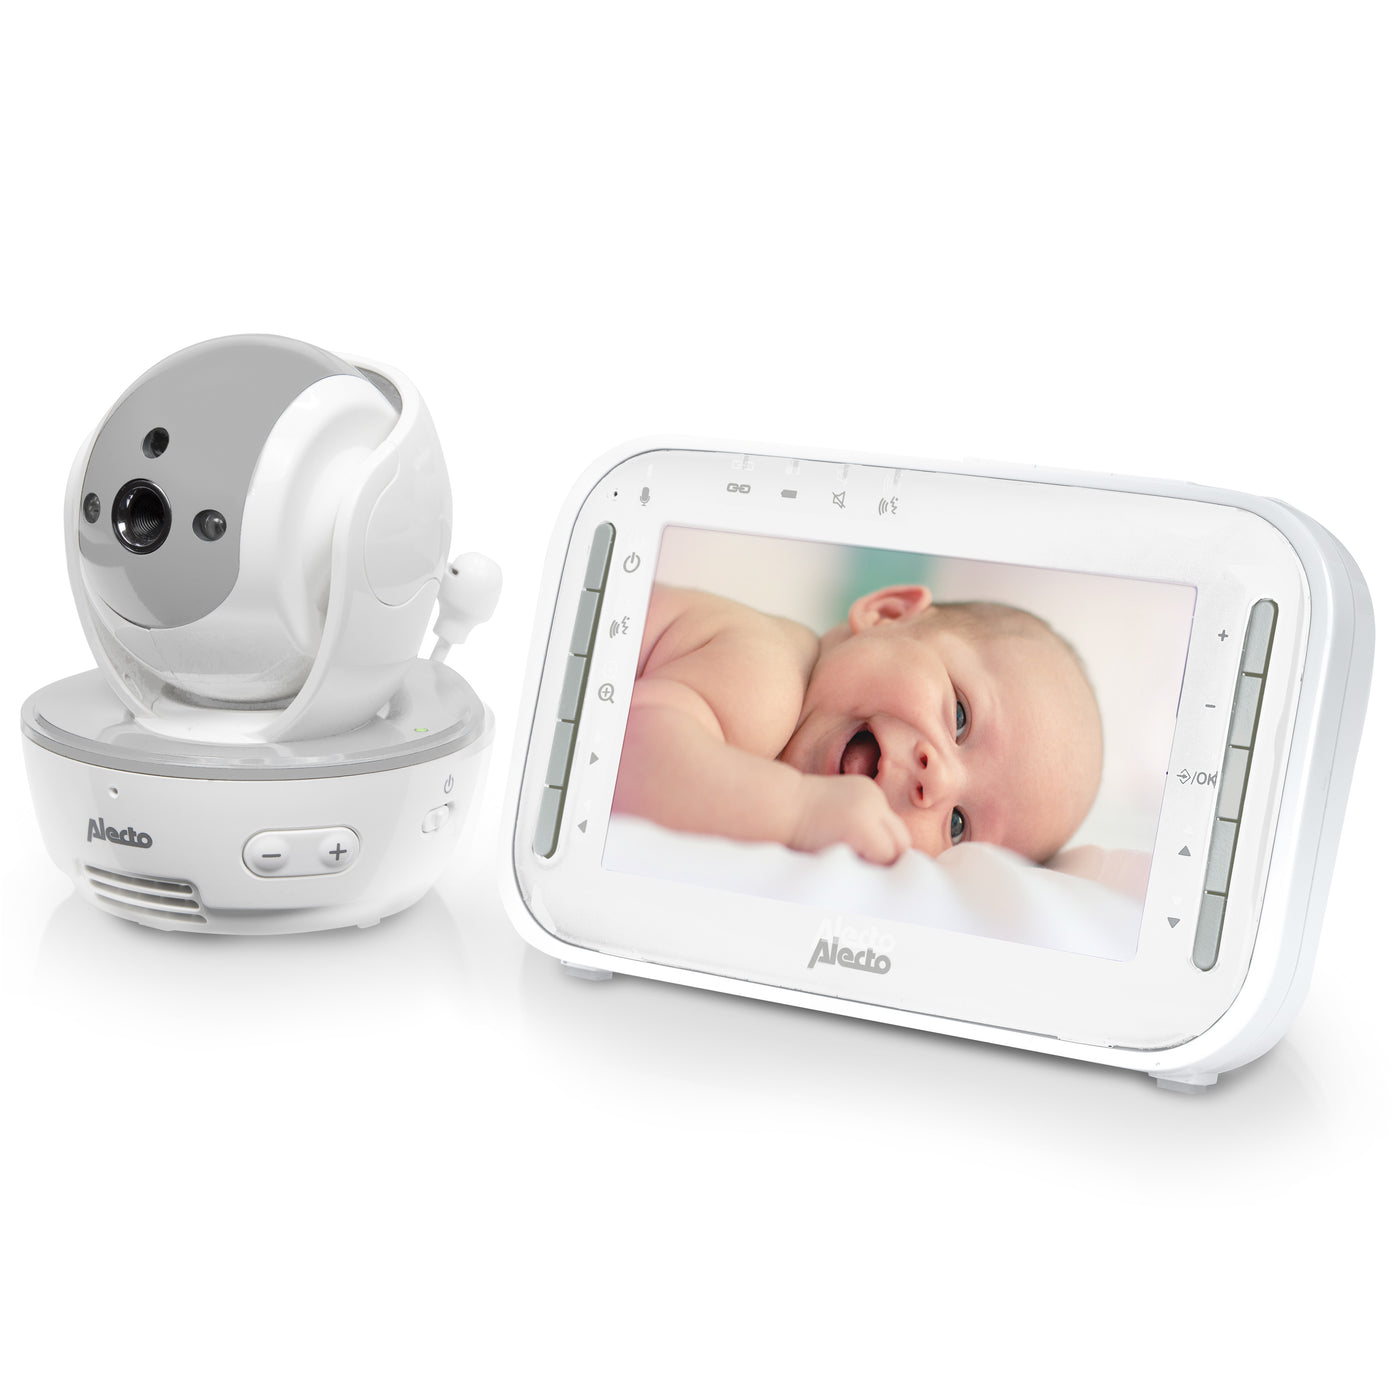 Alecto DVM200MGS - Babyphone mit Kamera und 4,3"-Farbdisplay, Weiß/Grau